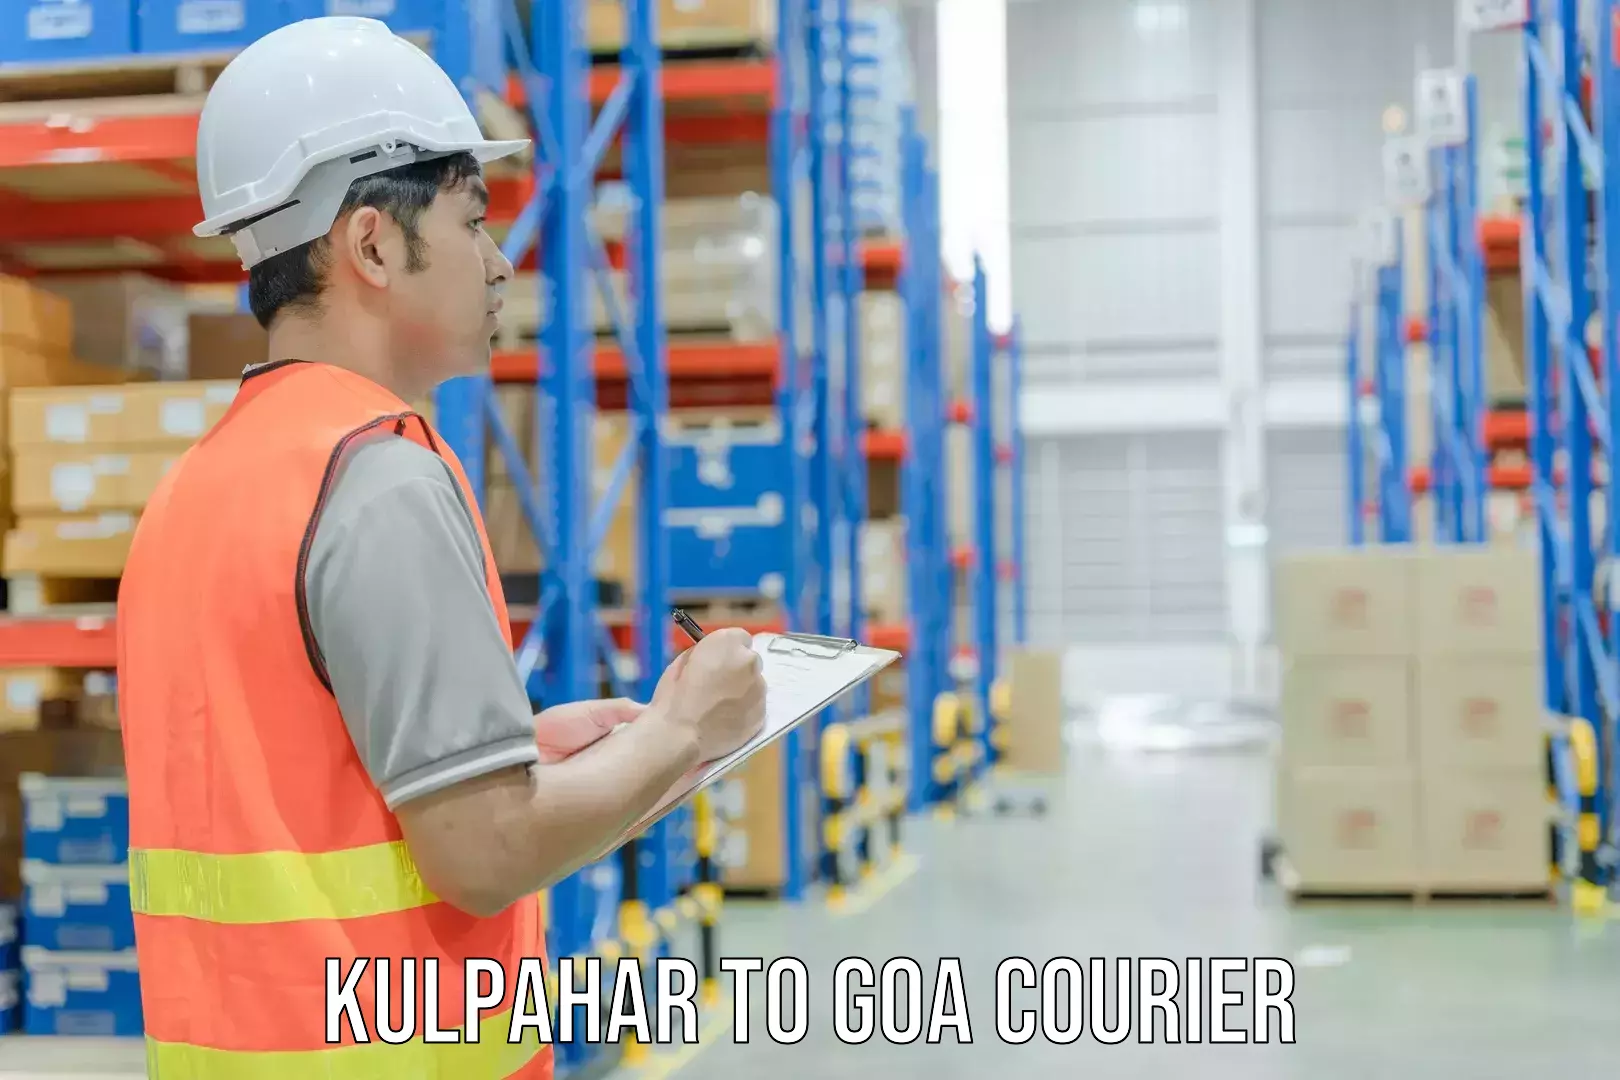 Courier service comparison Kulpahar to Panaji